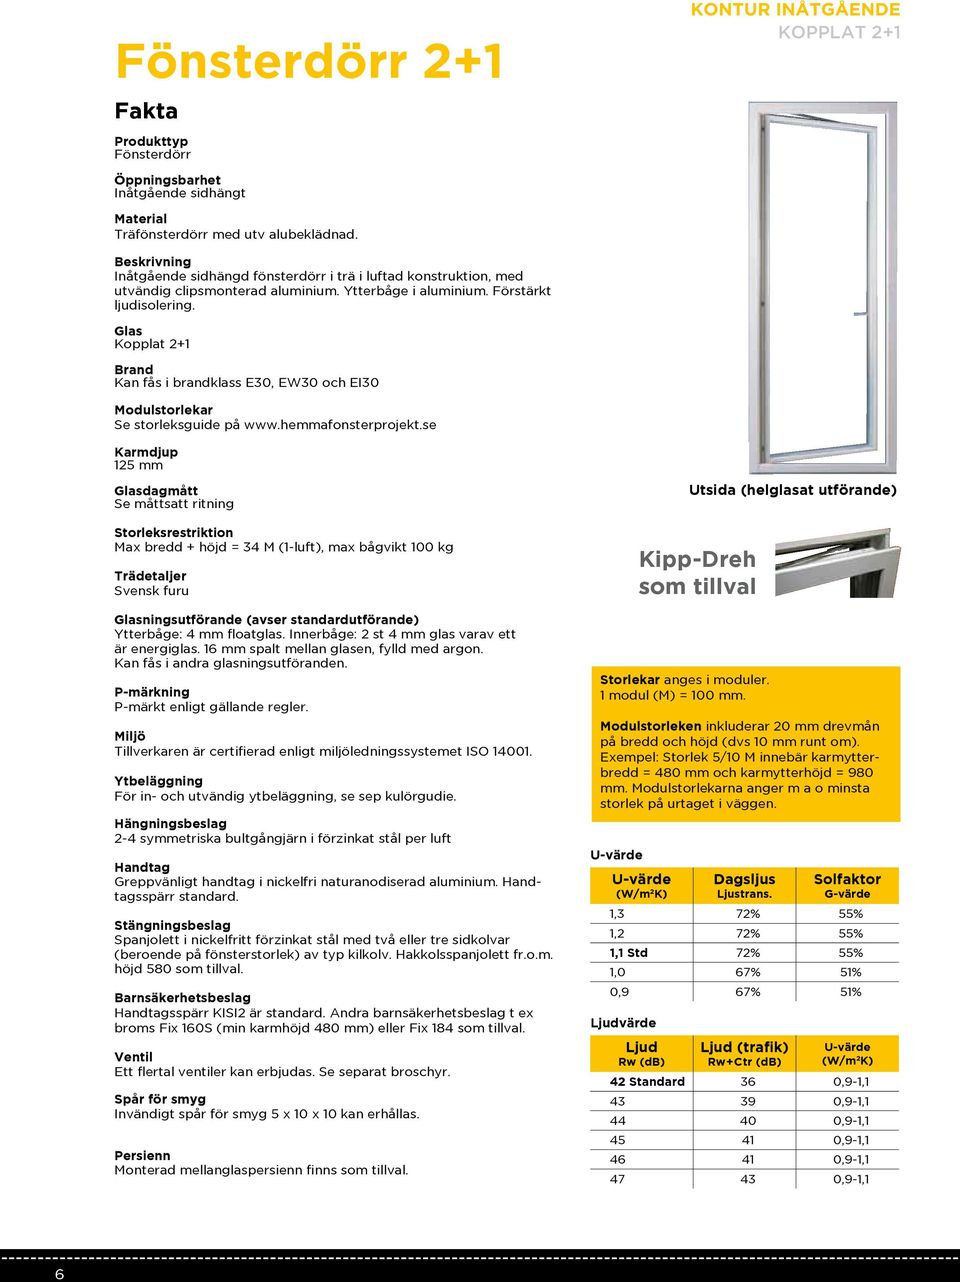 Glas Kopplat 2+1 Brand Kan fås i brandklass E30, EW30 och EI30 Modulstorlekar Se storleksguide på www.hemmafonsterprojekt.